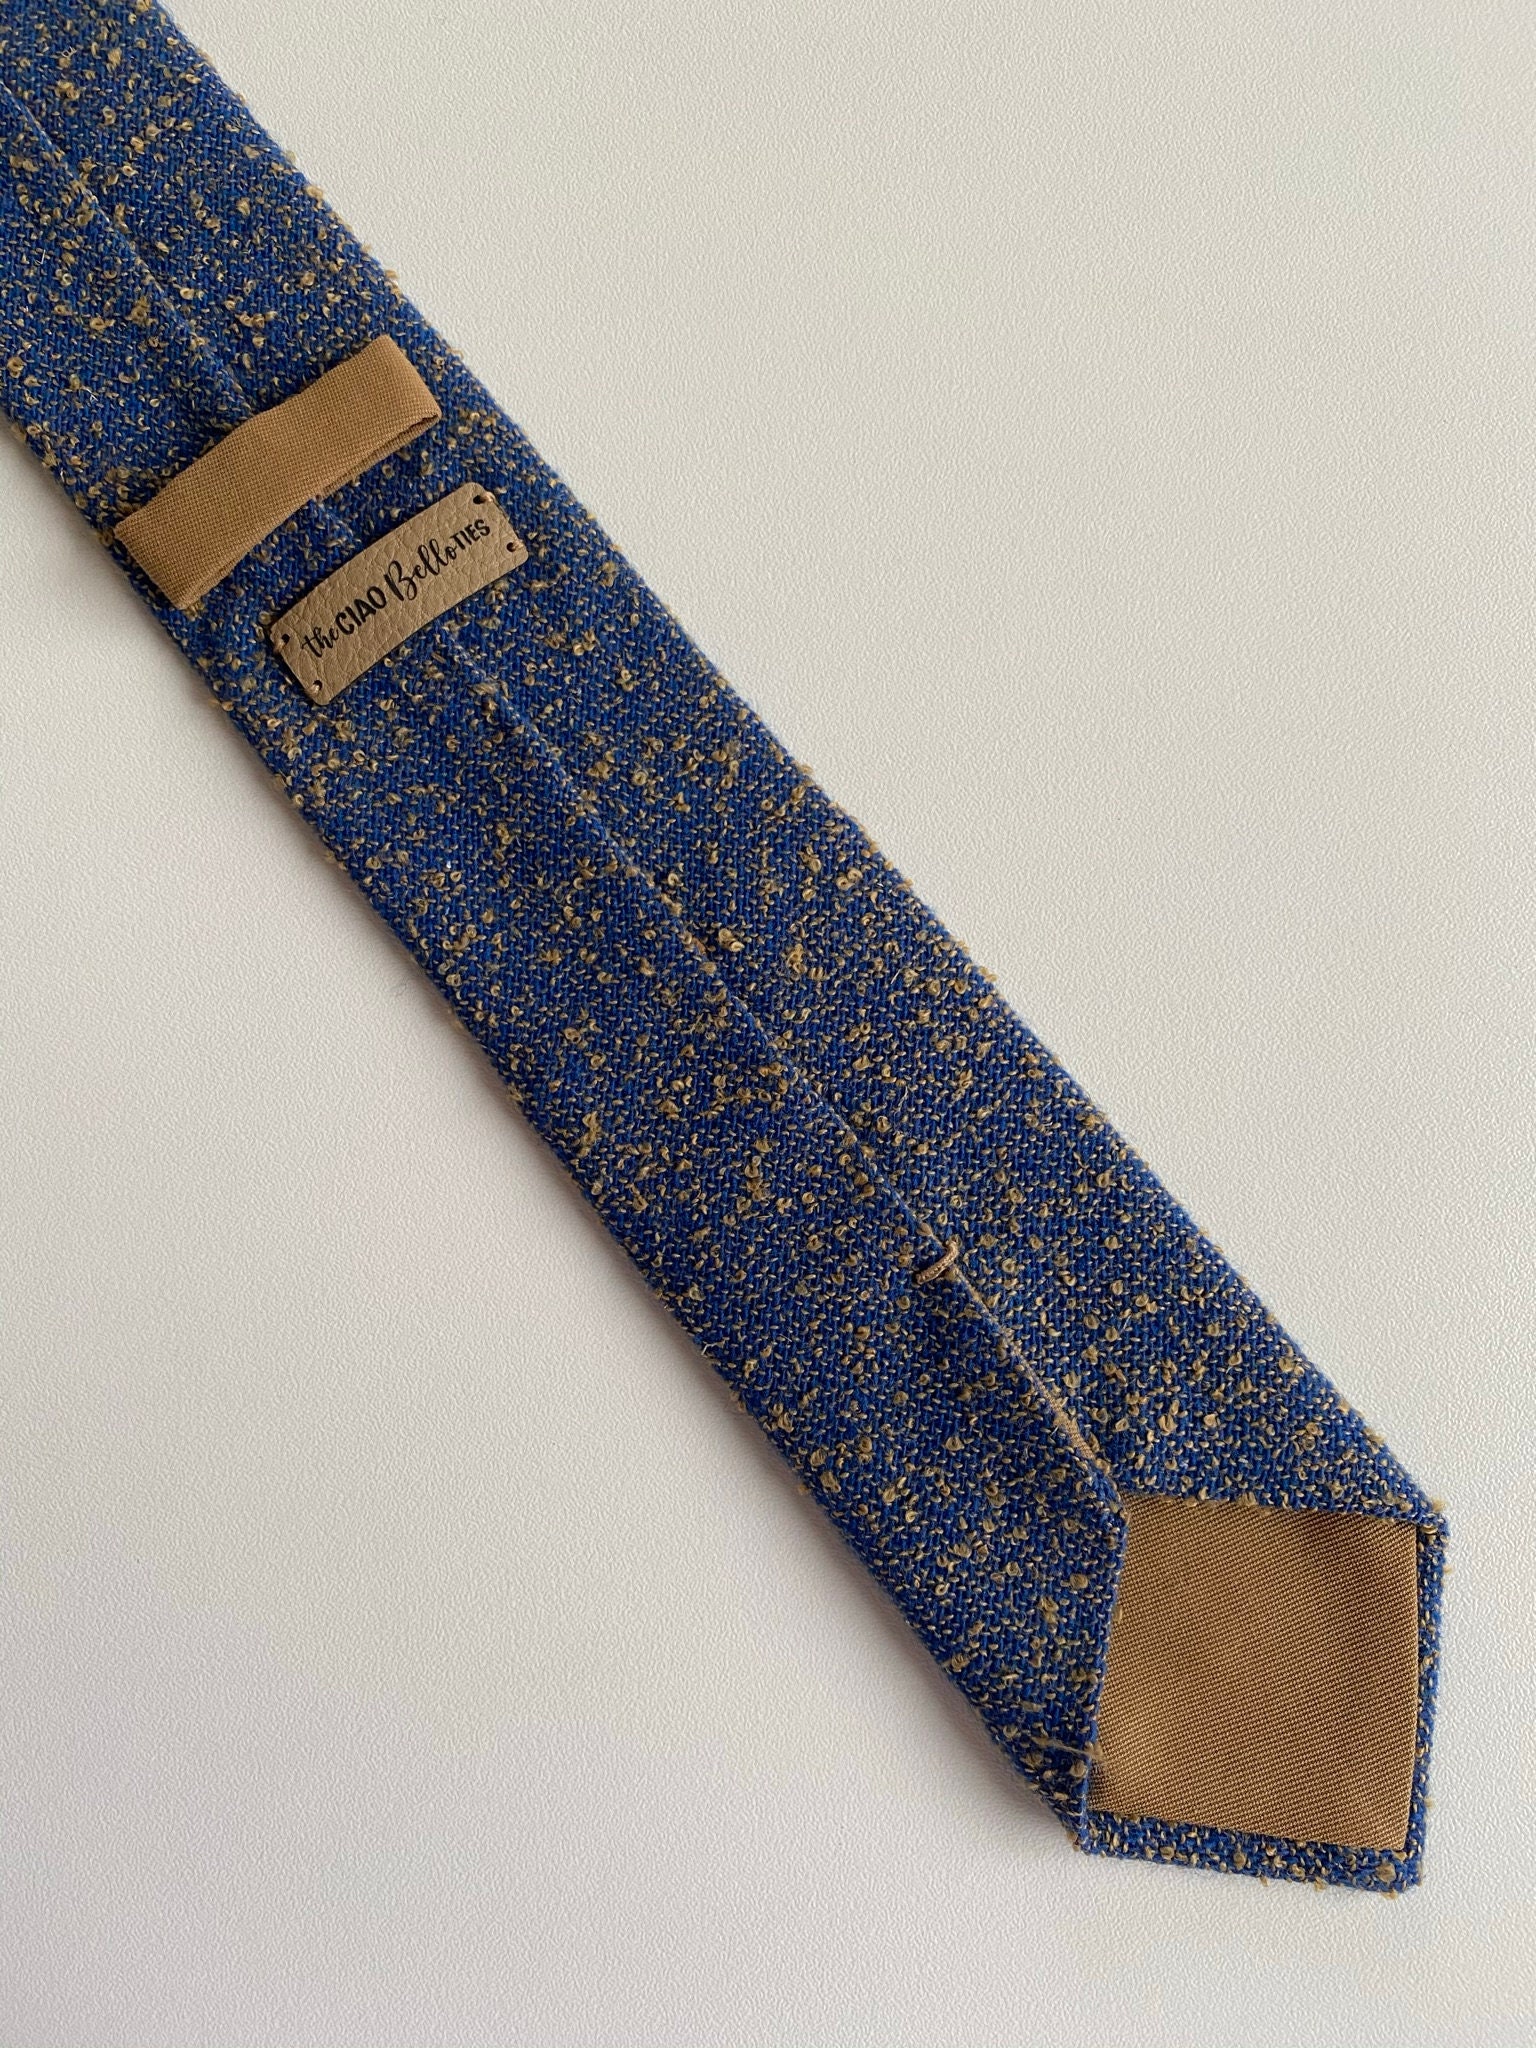 Wool Cerulean Blue and Caramel Tie Handmade Tie Made in | Etsy